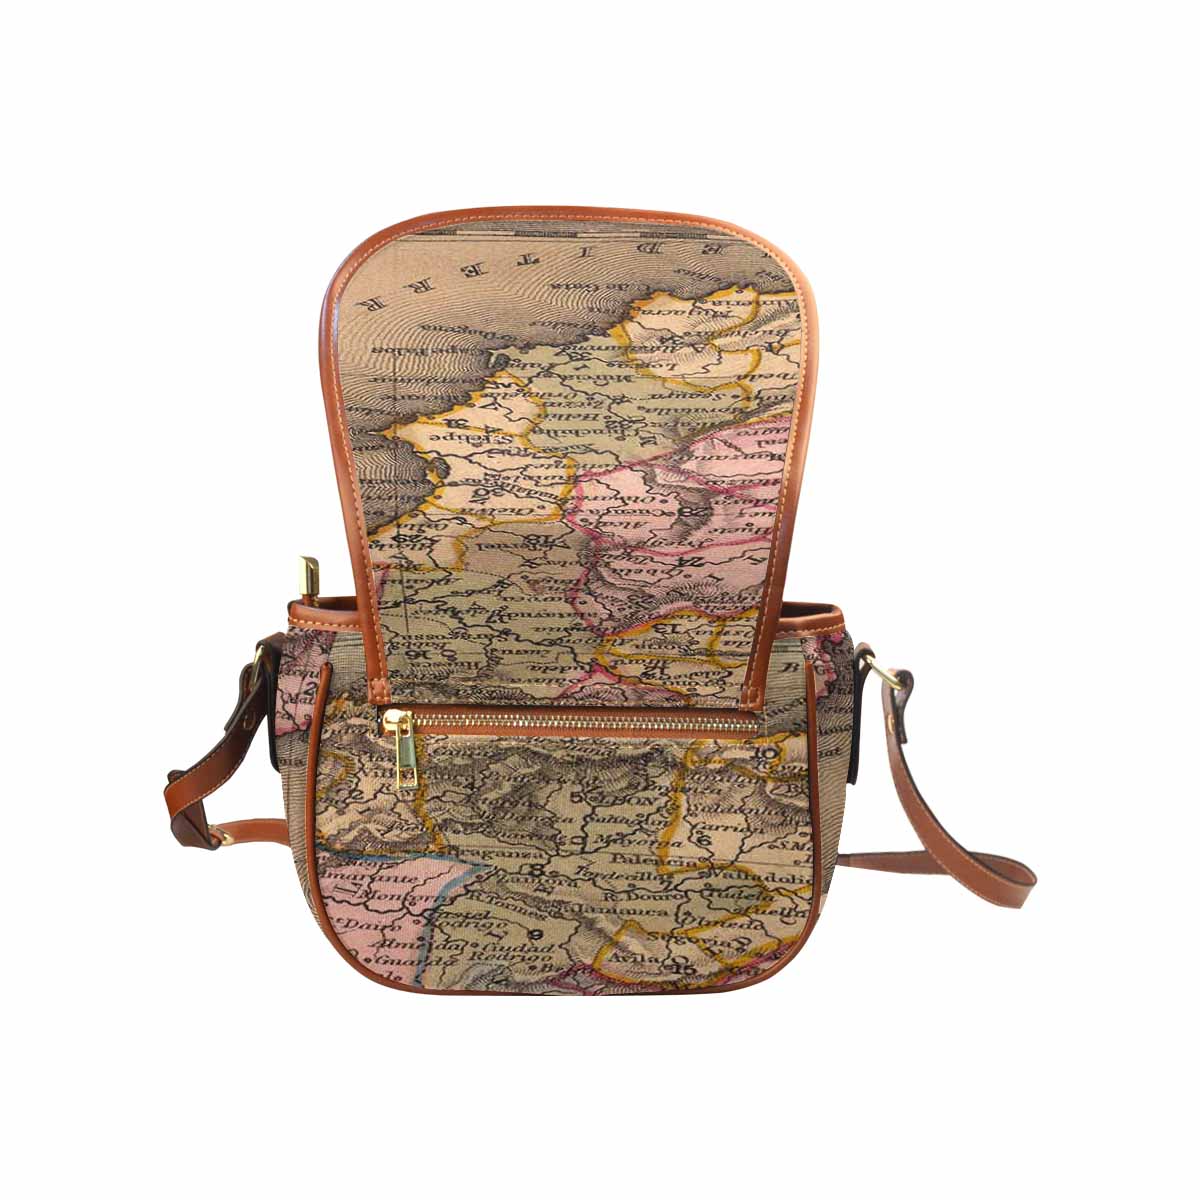 Antique Map design Handbag, saddle bag, Design 16